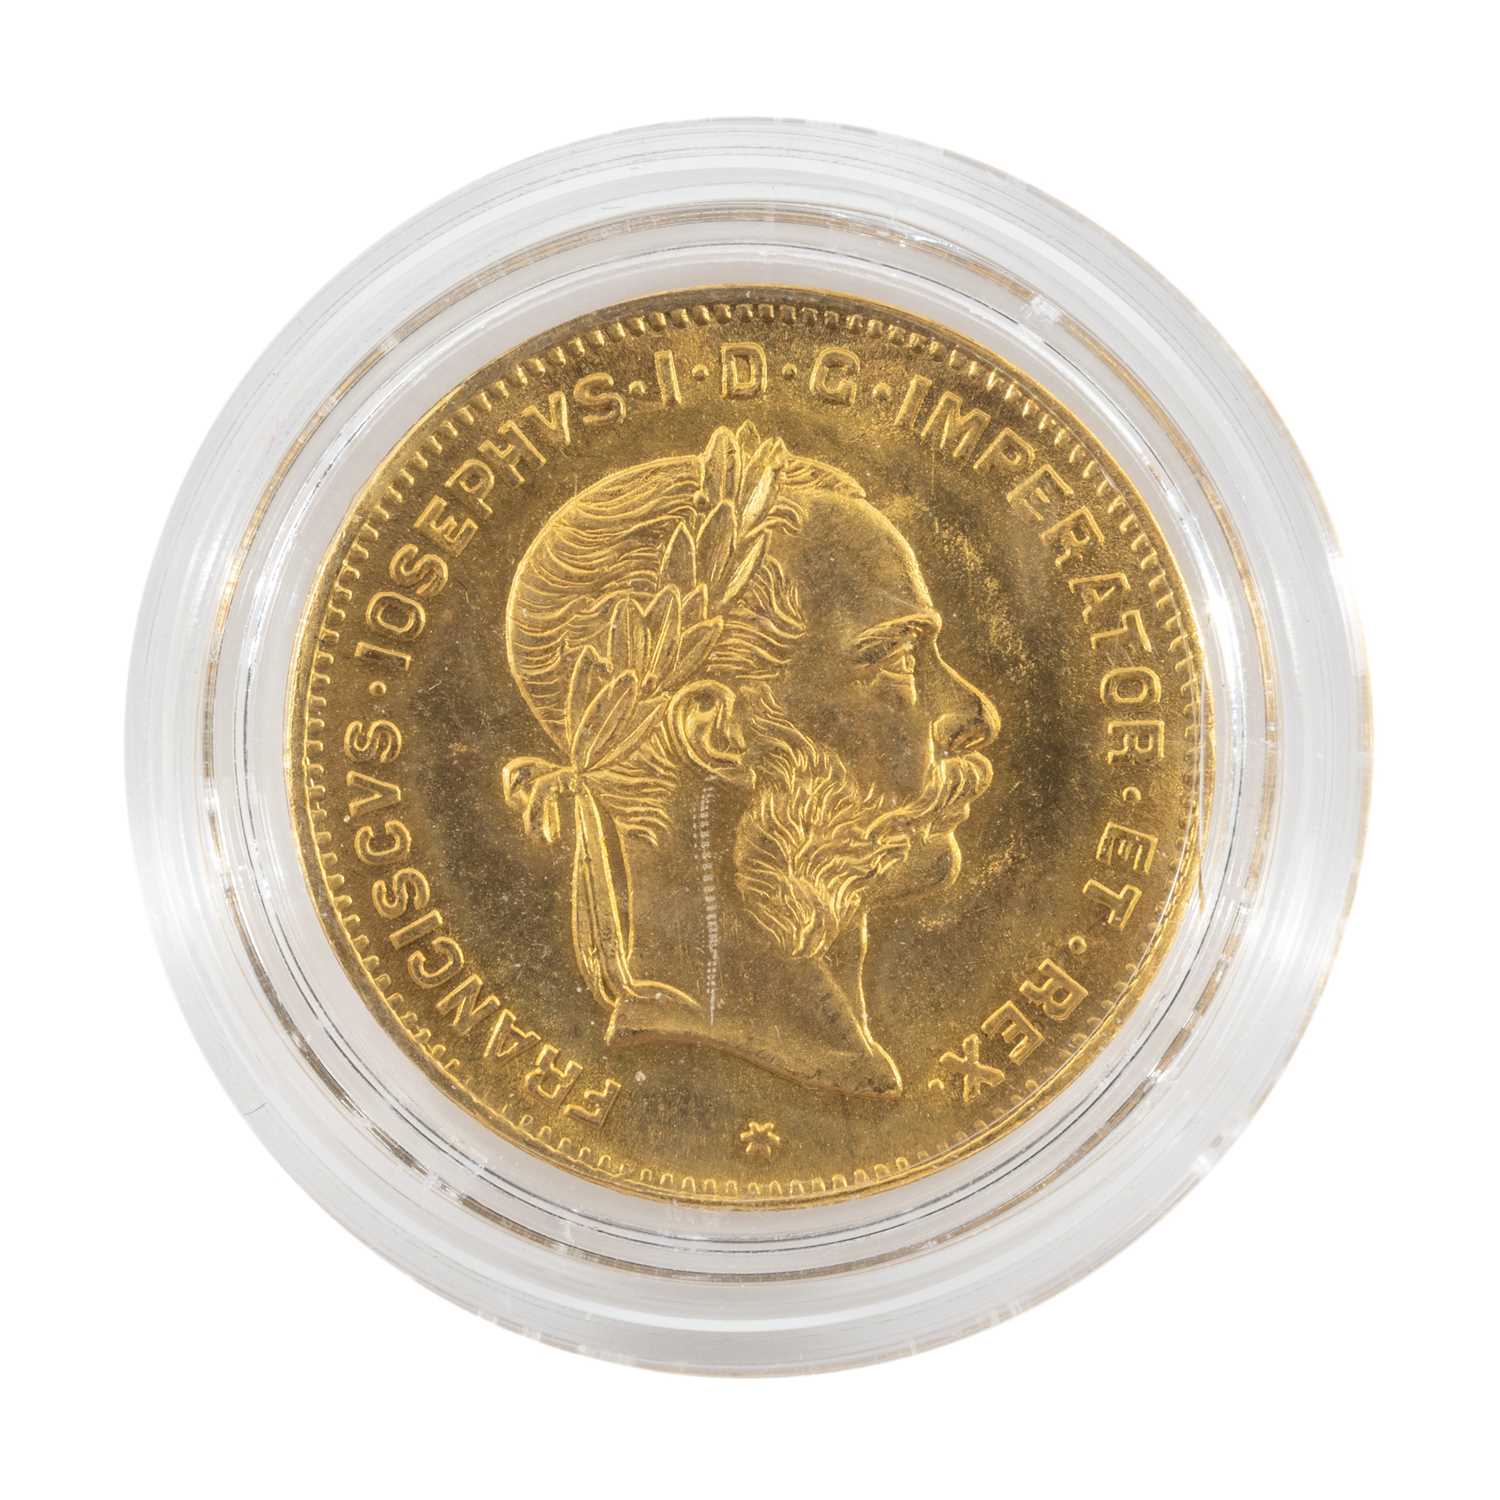 AUSTRIAN FRANZ JOSEPH 14 FLORIN / 10 FRANCS GOLD COIN, 1892, restrike, 3.2gms Provenance: private - Image 2 of 2